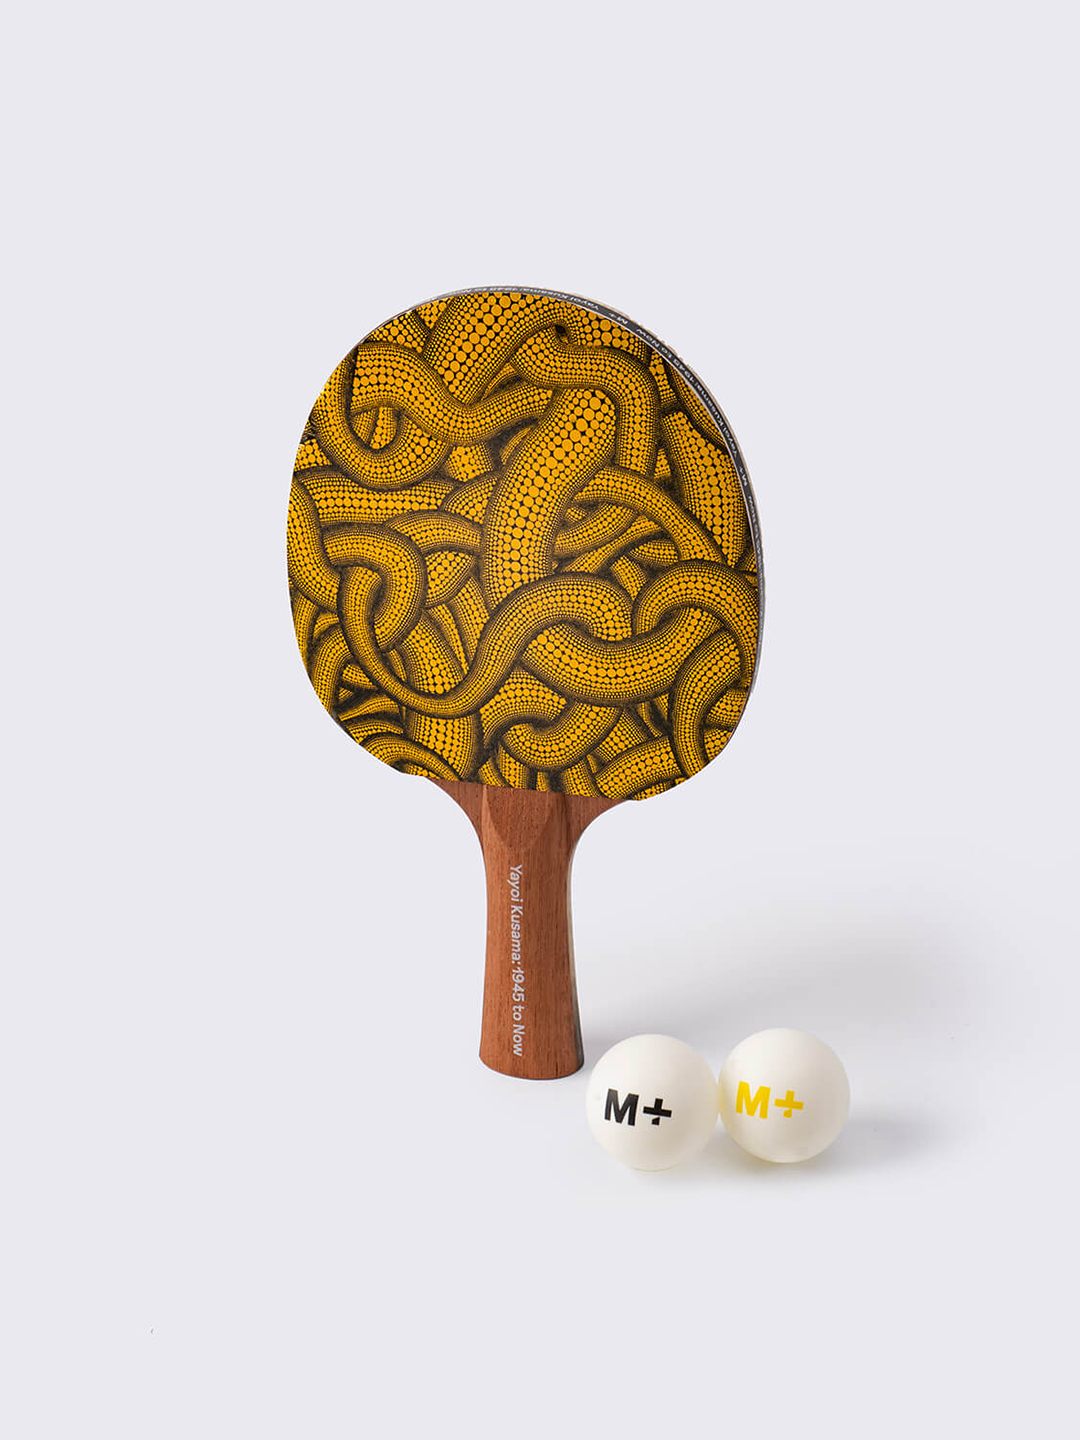 Yayoi Kusama table tennis bat with balls. M+ Museum Art of Ping Pong